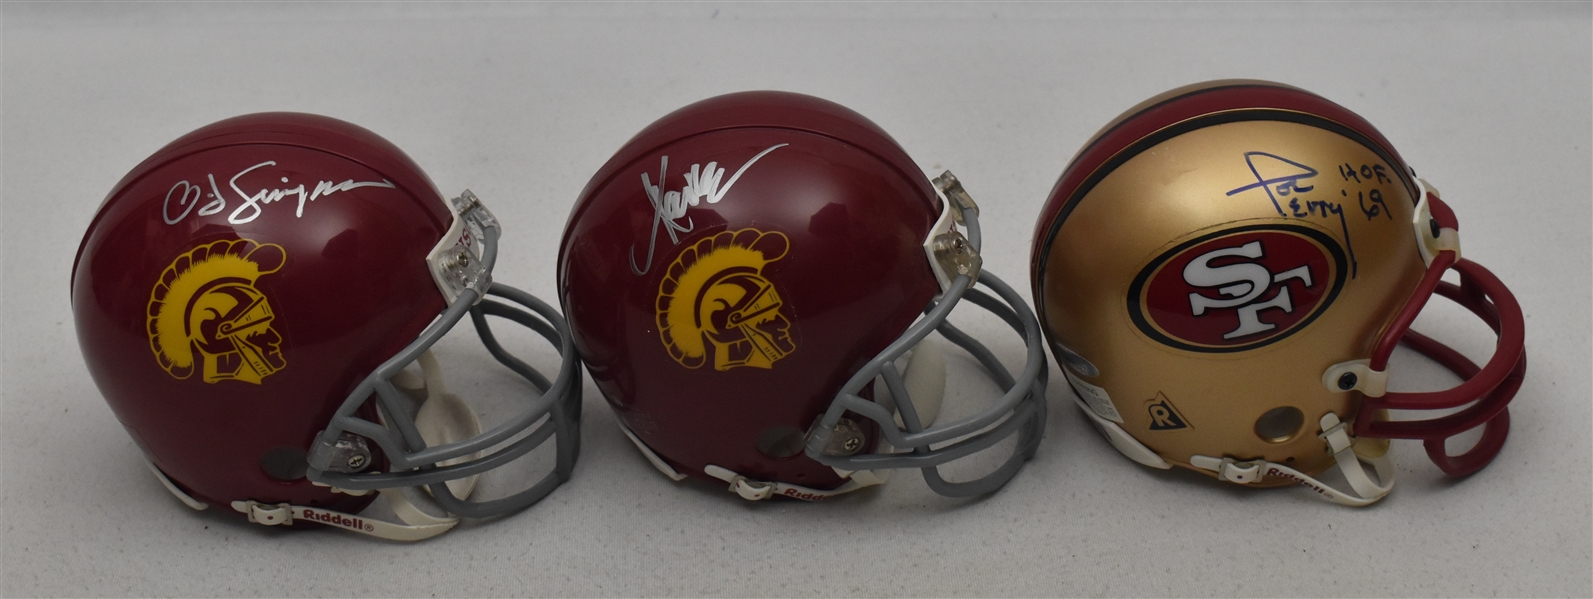 Collection of 3 Autographed Mini Helmets w/OJ Simpson & Marcus Allen